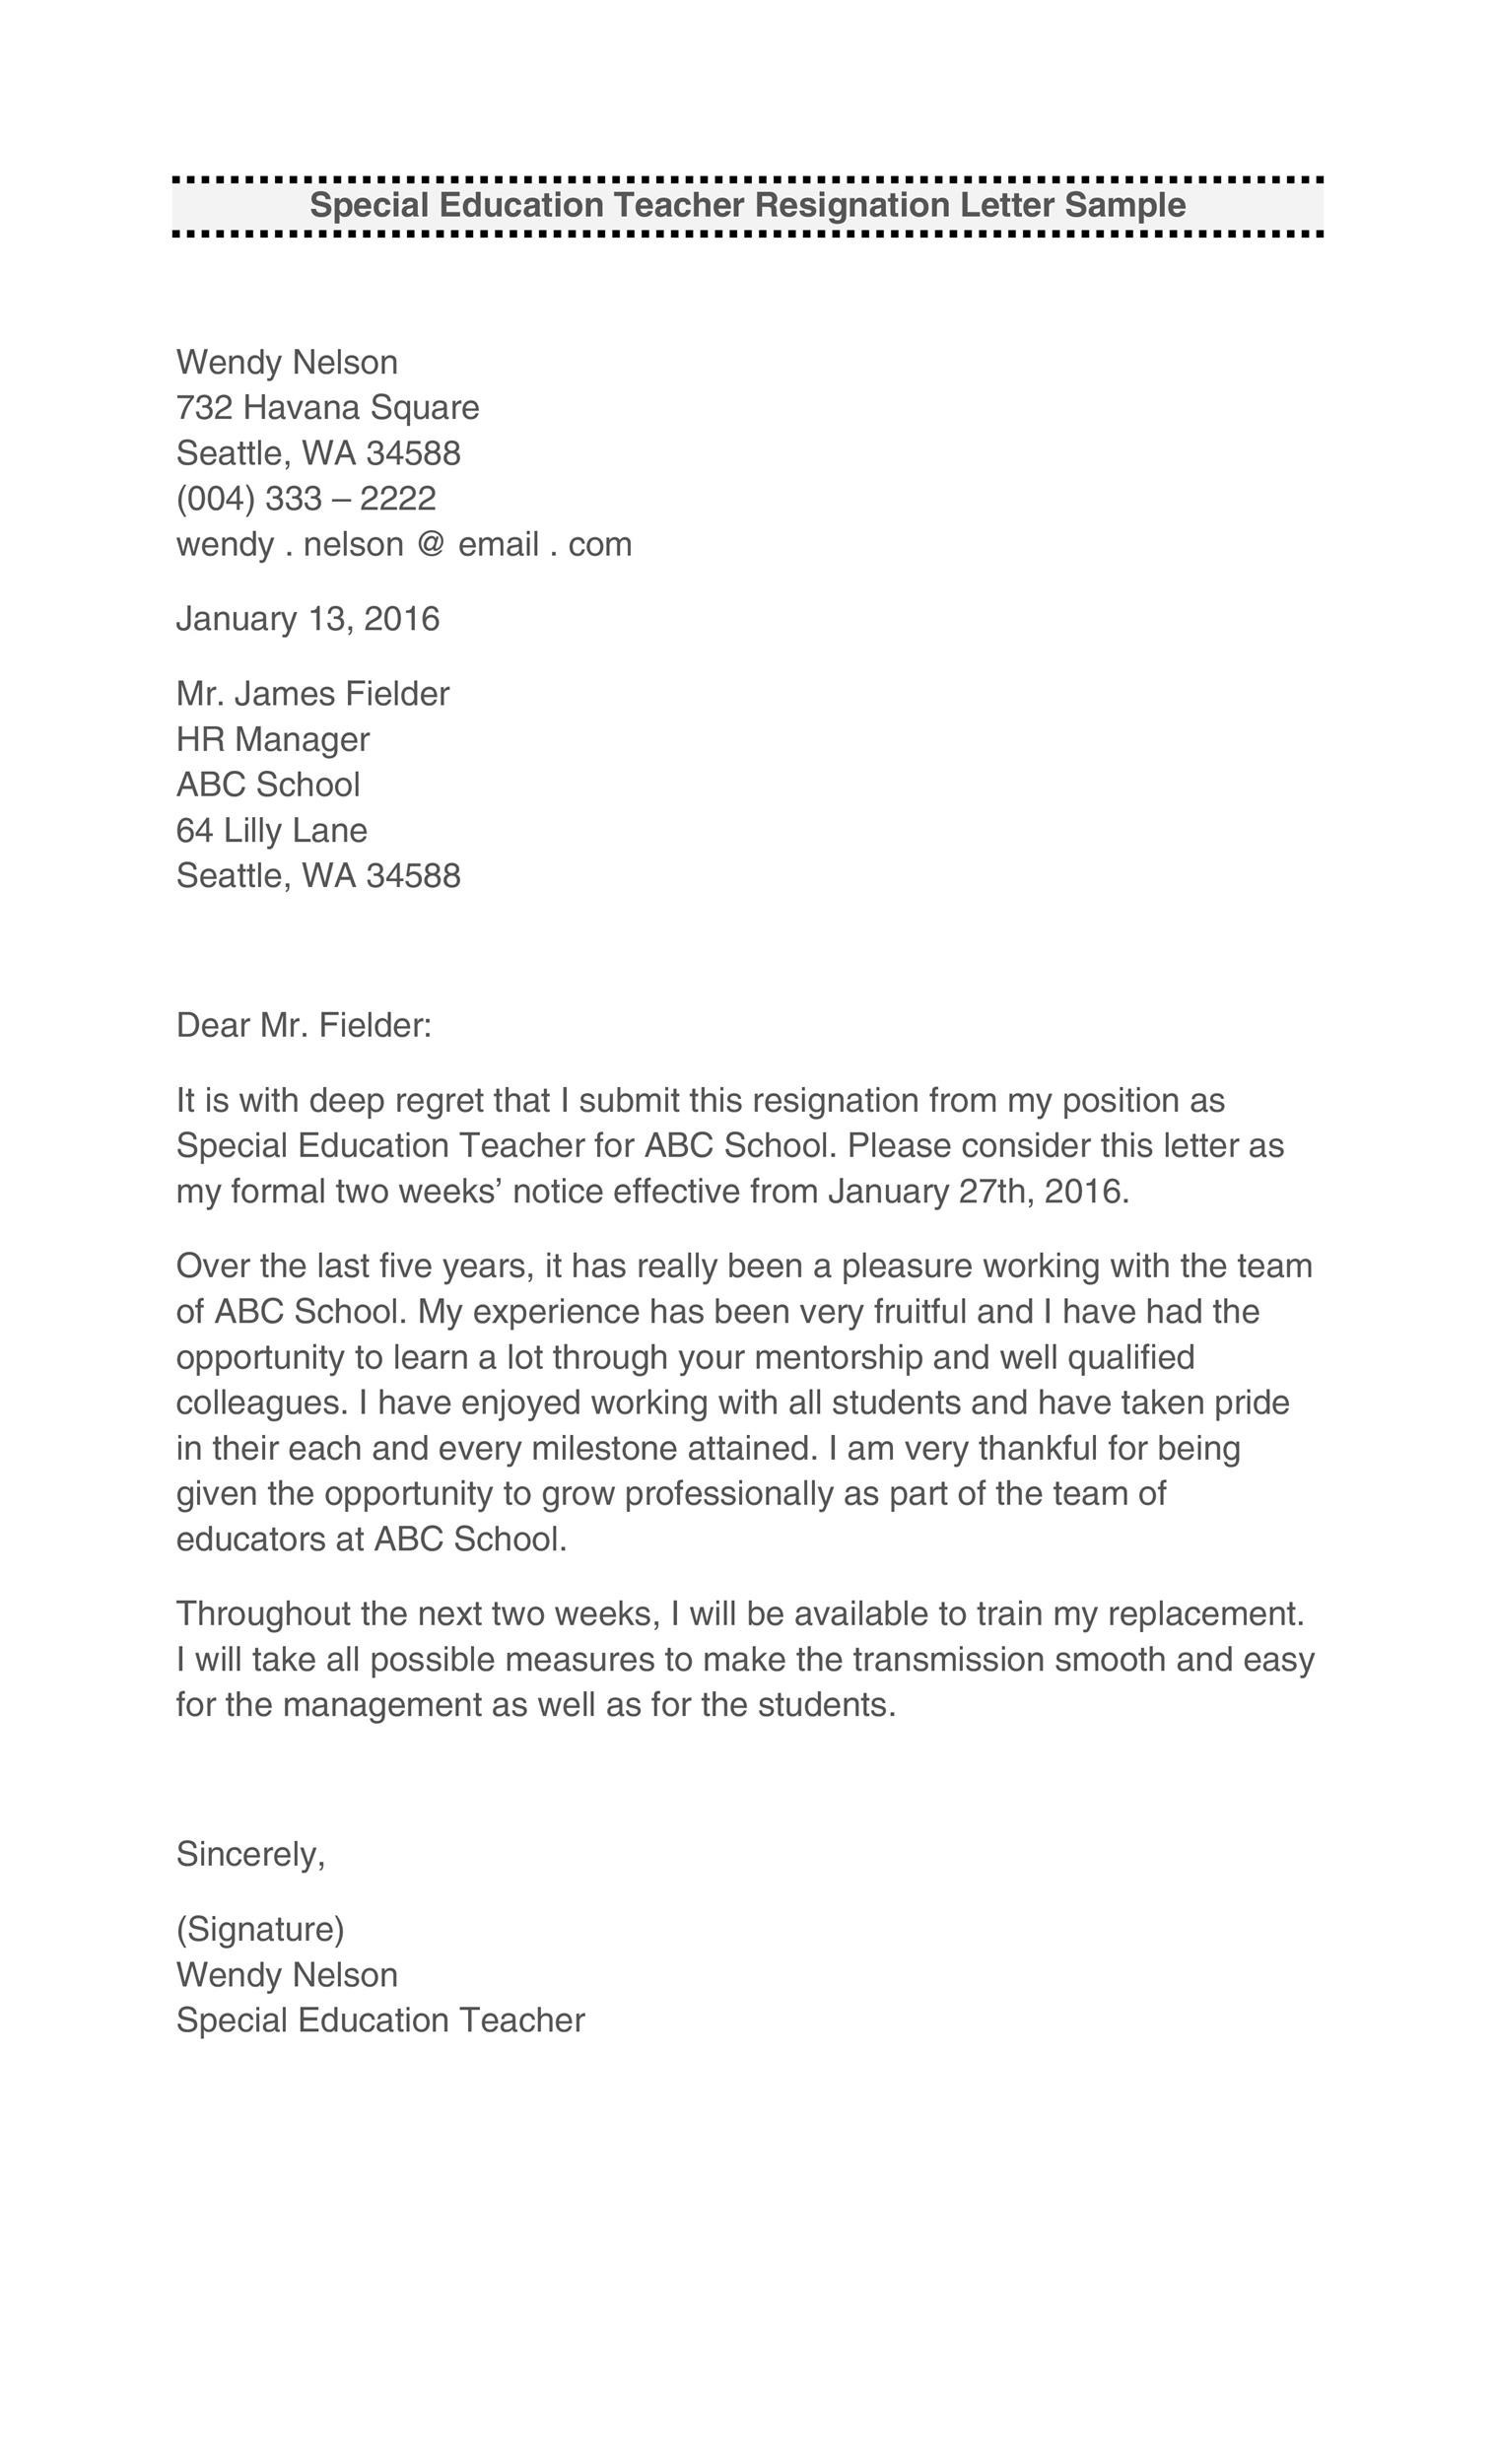 Sample Letter Of Retirement Resignation from templatelab.com